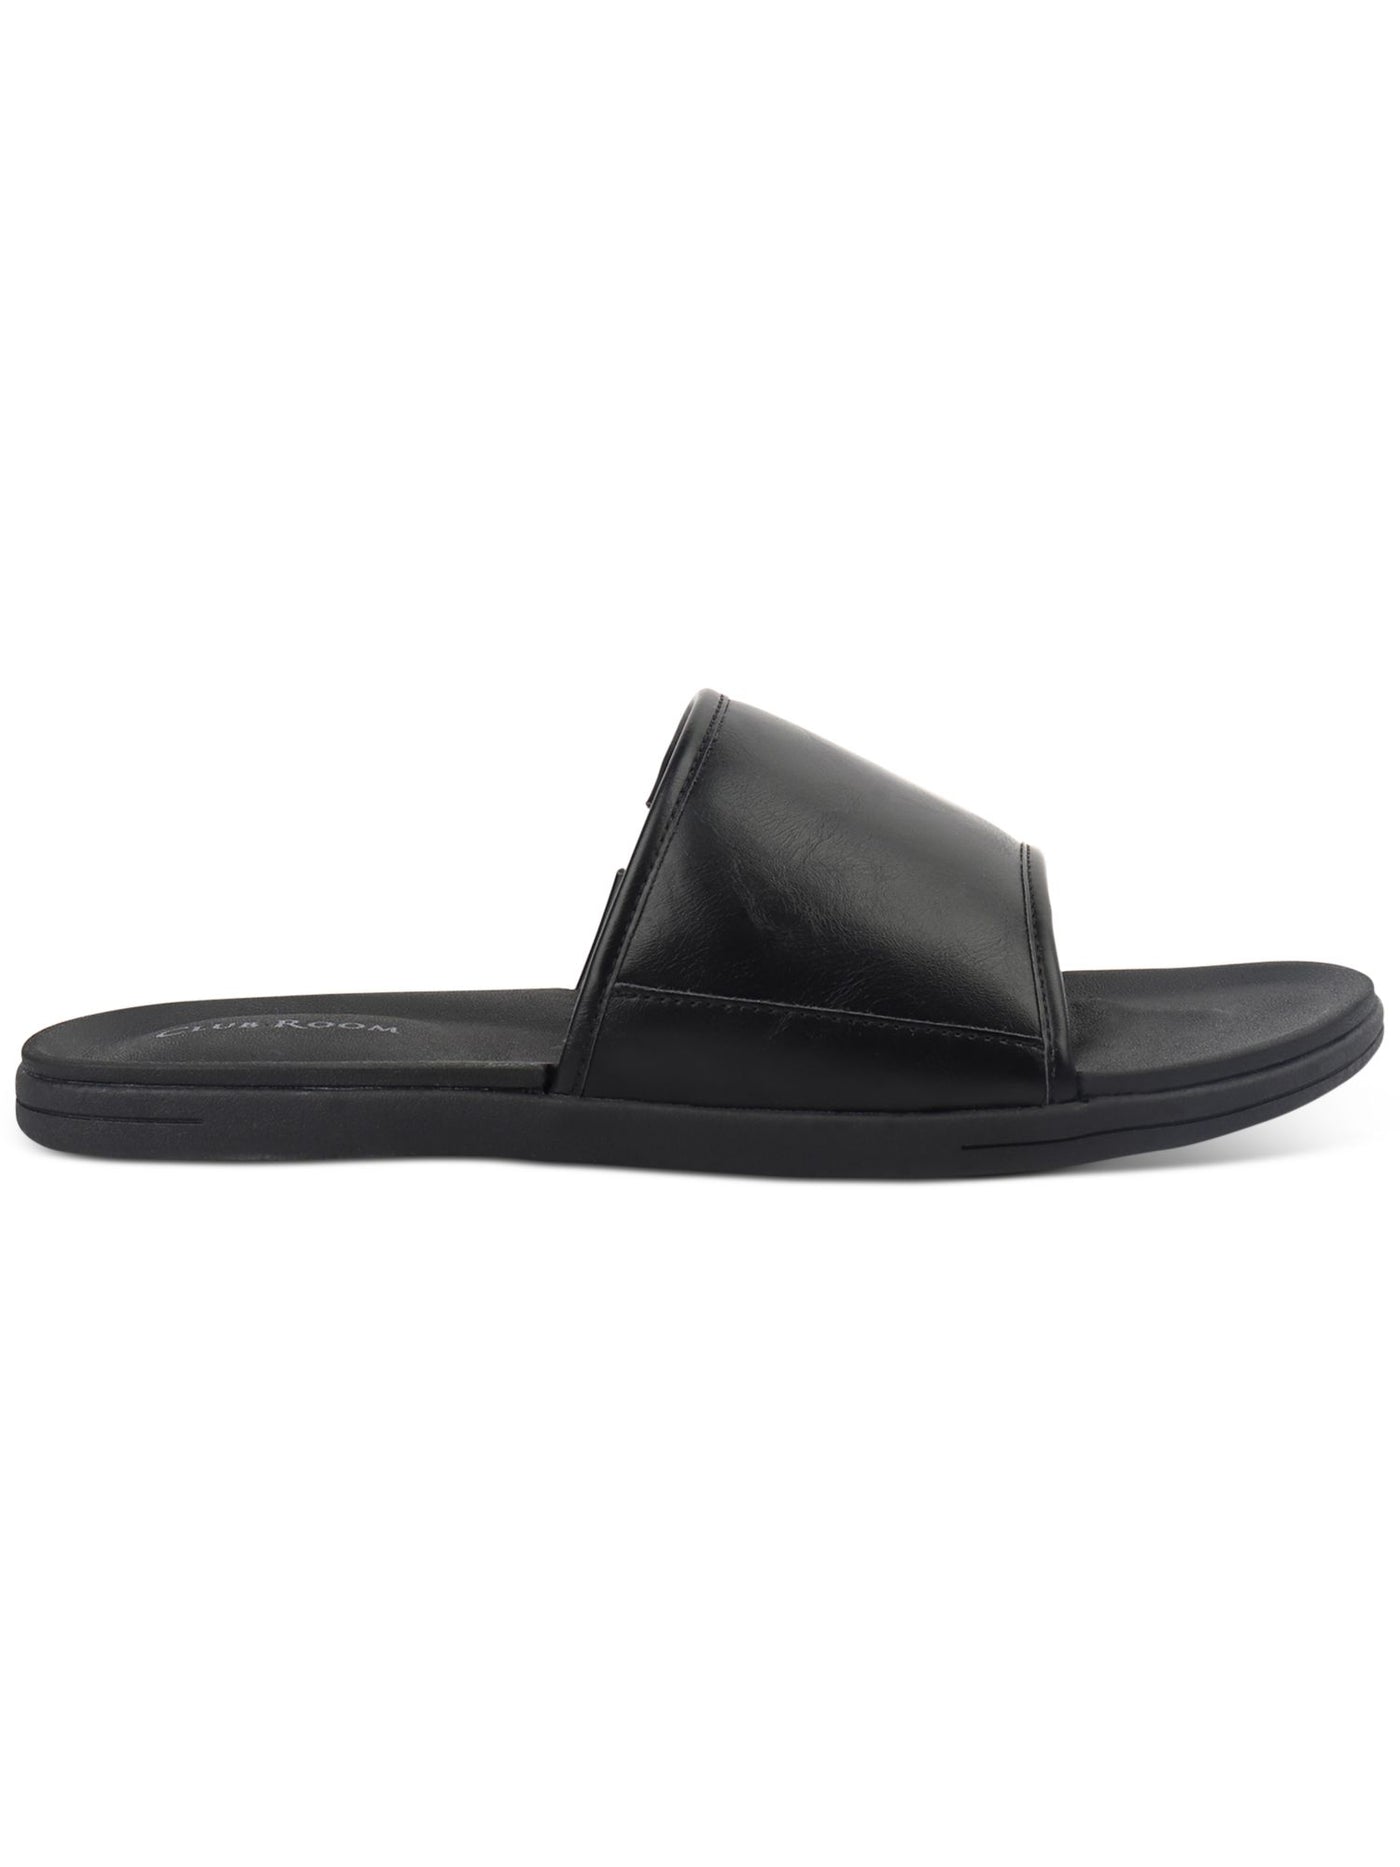 CLUBROOM Mens Black Arch Support Goring Cruz Round Toe Slip On Slide Sandals Shoes 10 M